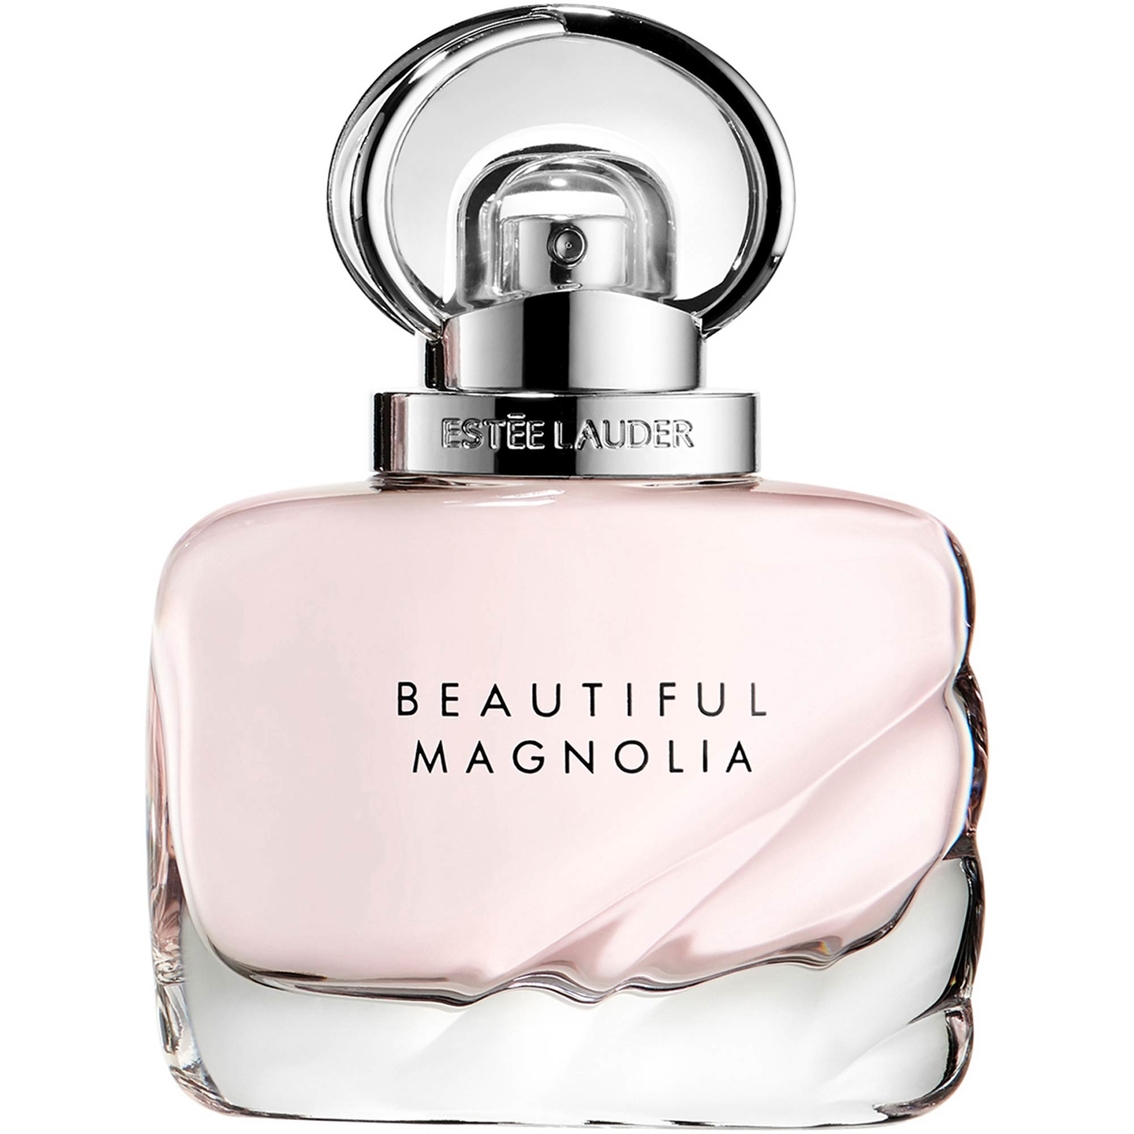 Estee Lauder Beautiful Magnolia Eau de Parfum Spray, 1 oz.